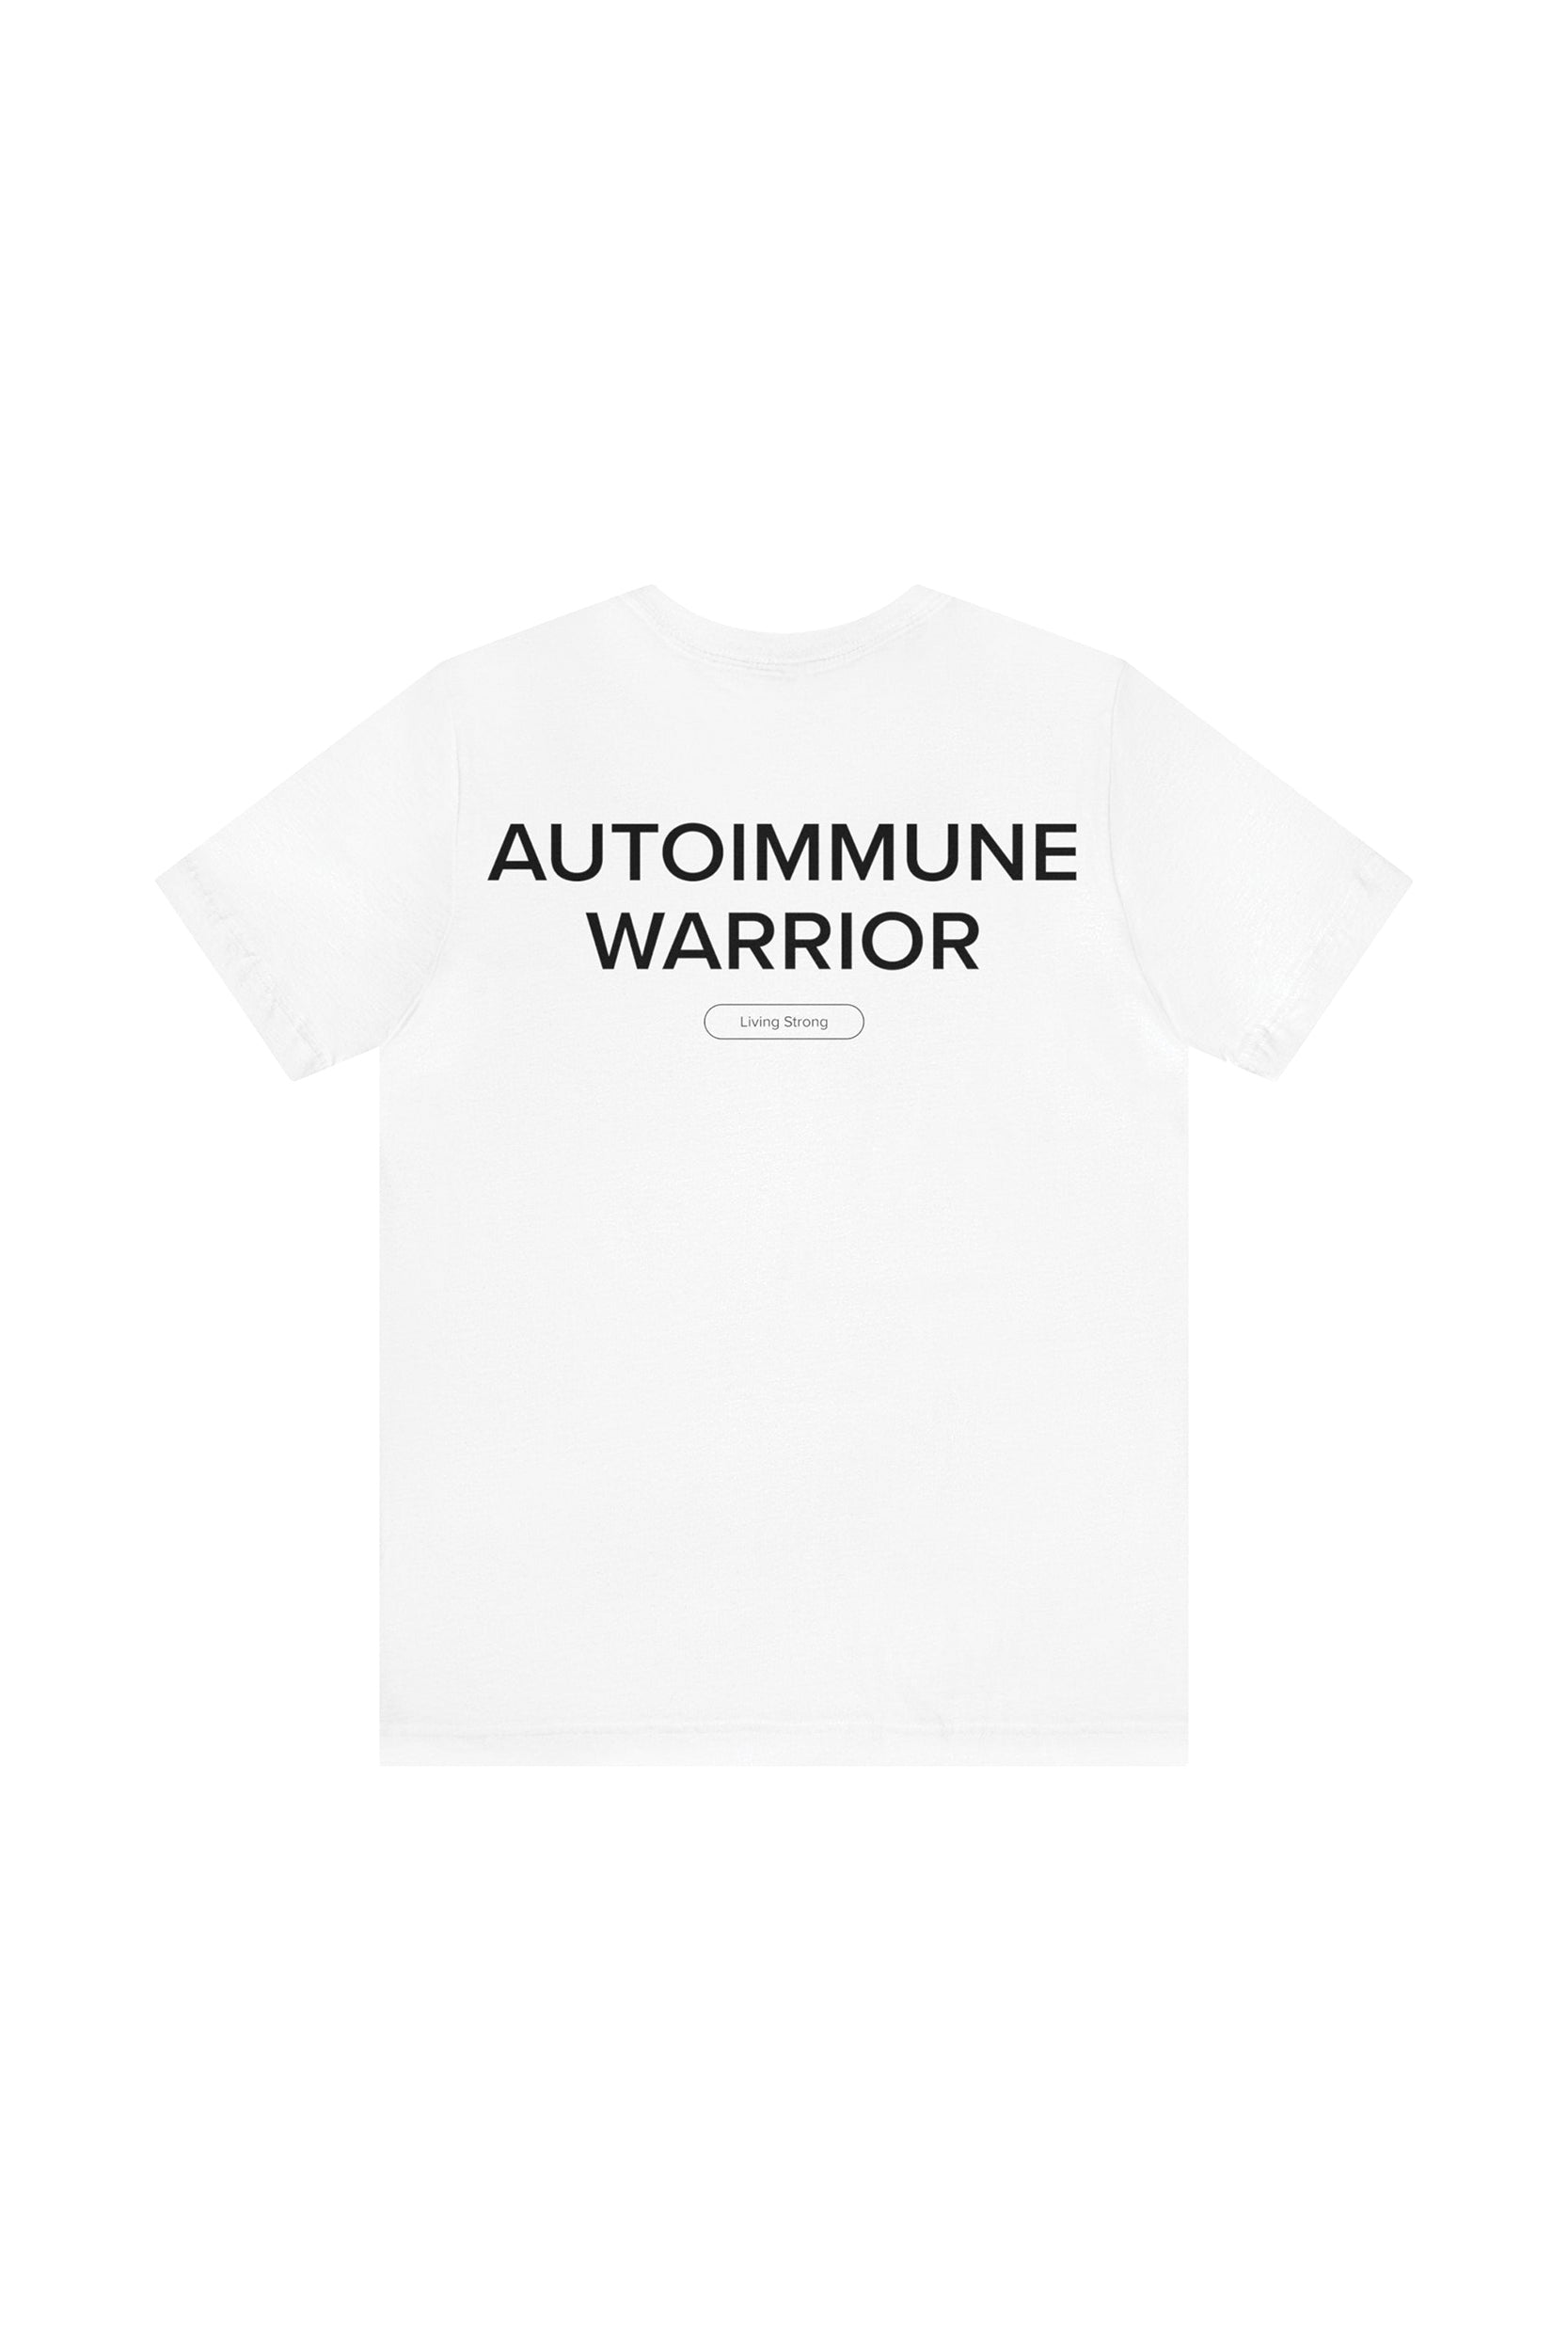 "AUTOIMMUNE WARRIOR" T-Shirt